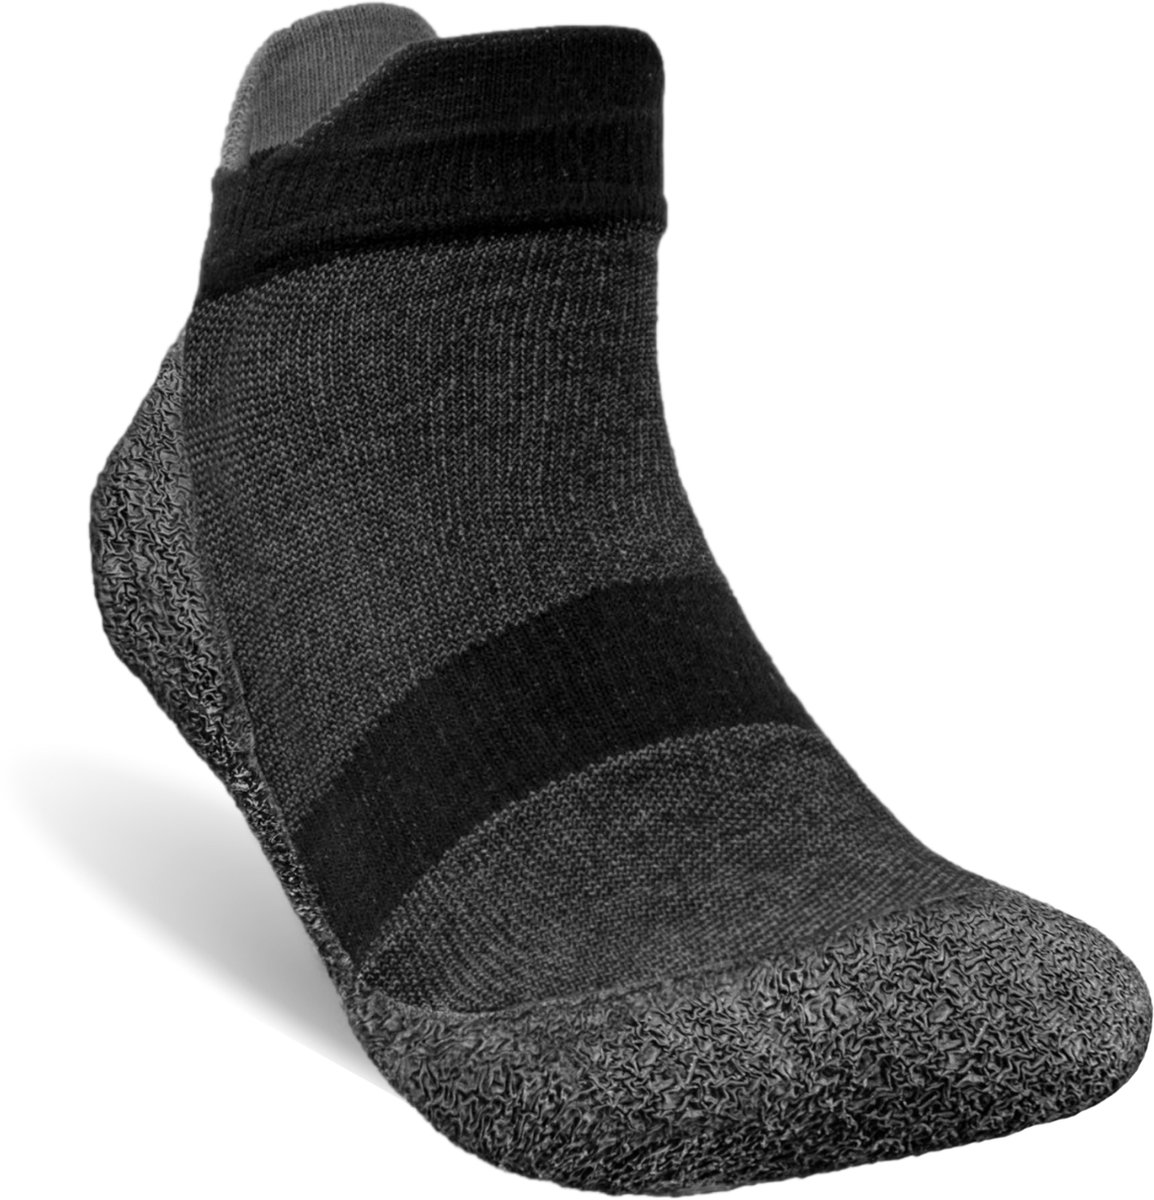 Baresocks 2.0 - Barefoot sokschoen maat XS